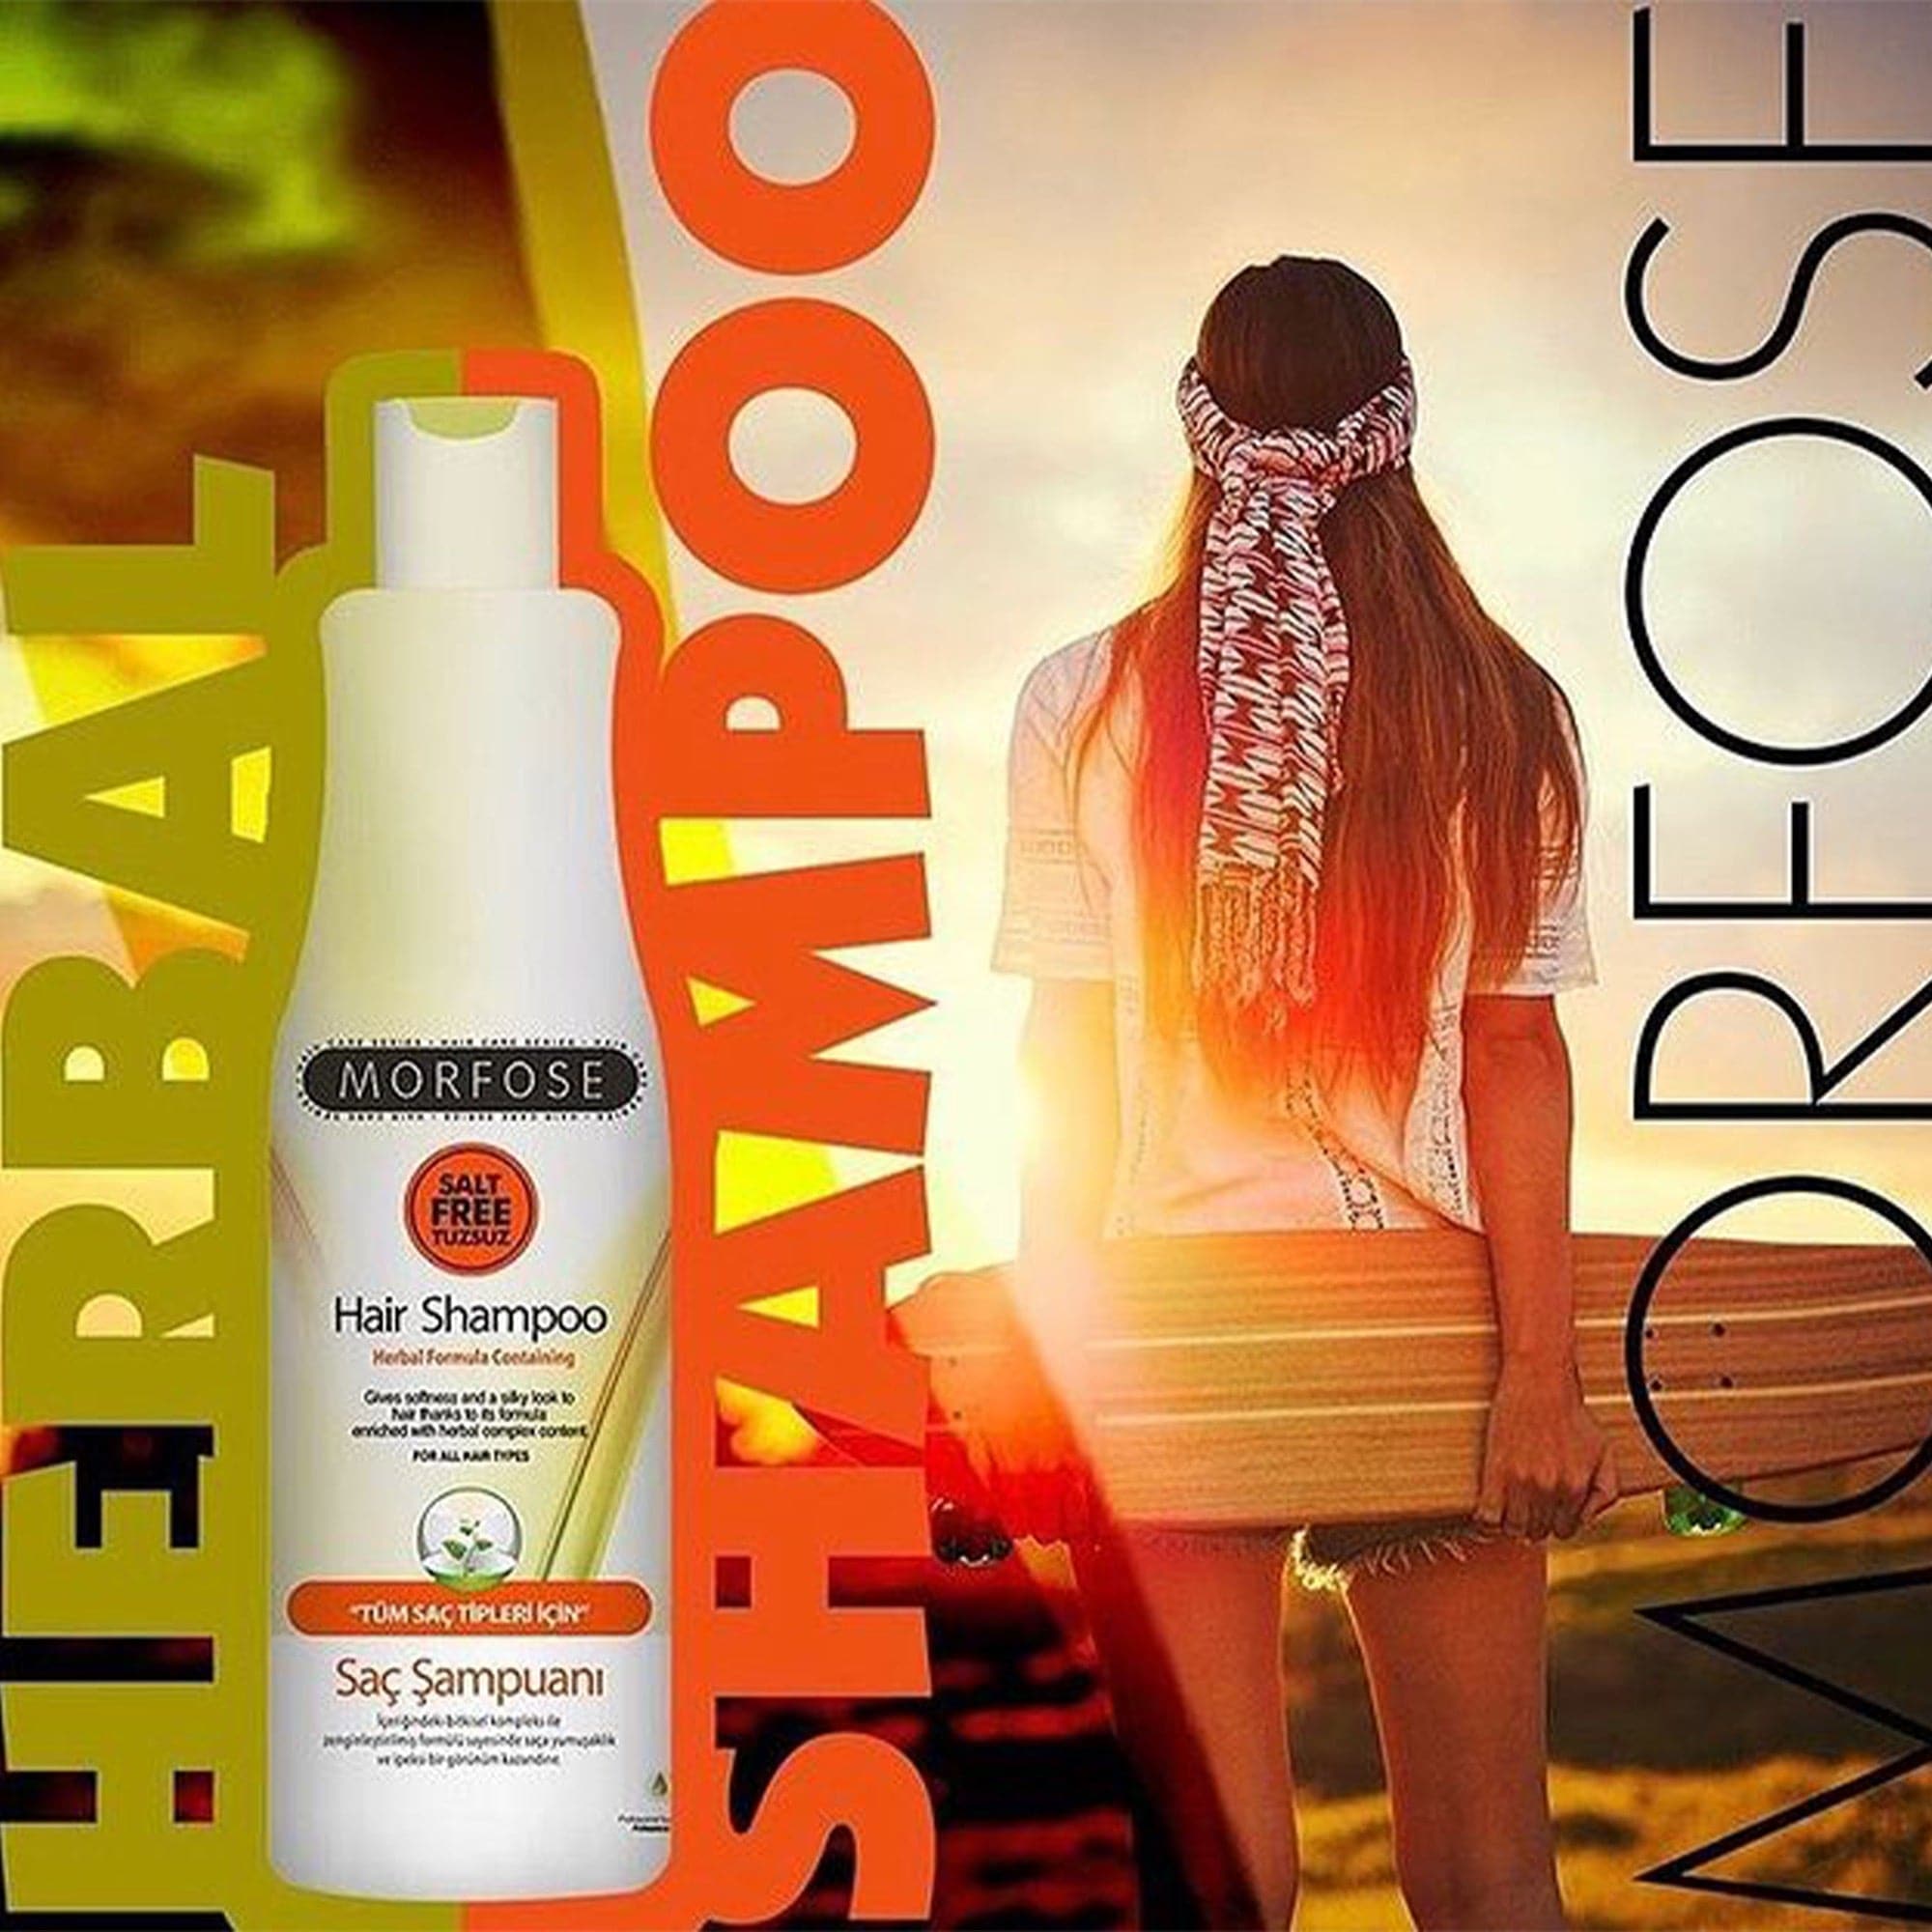 Morfose - Herbal Salt Free Shampoo 500ml